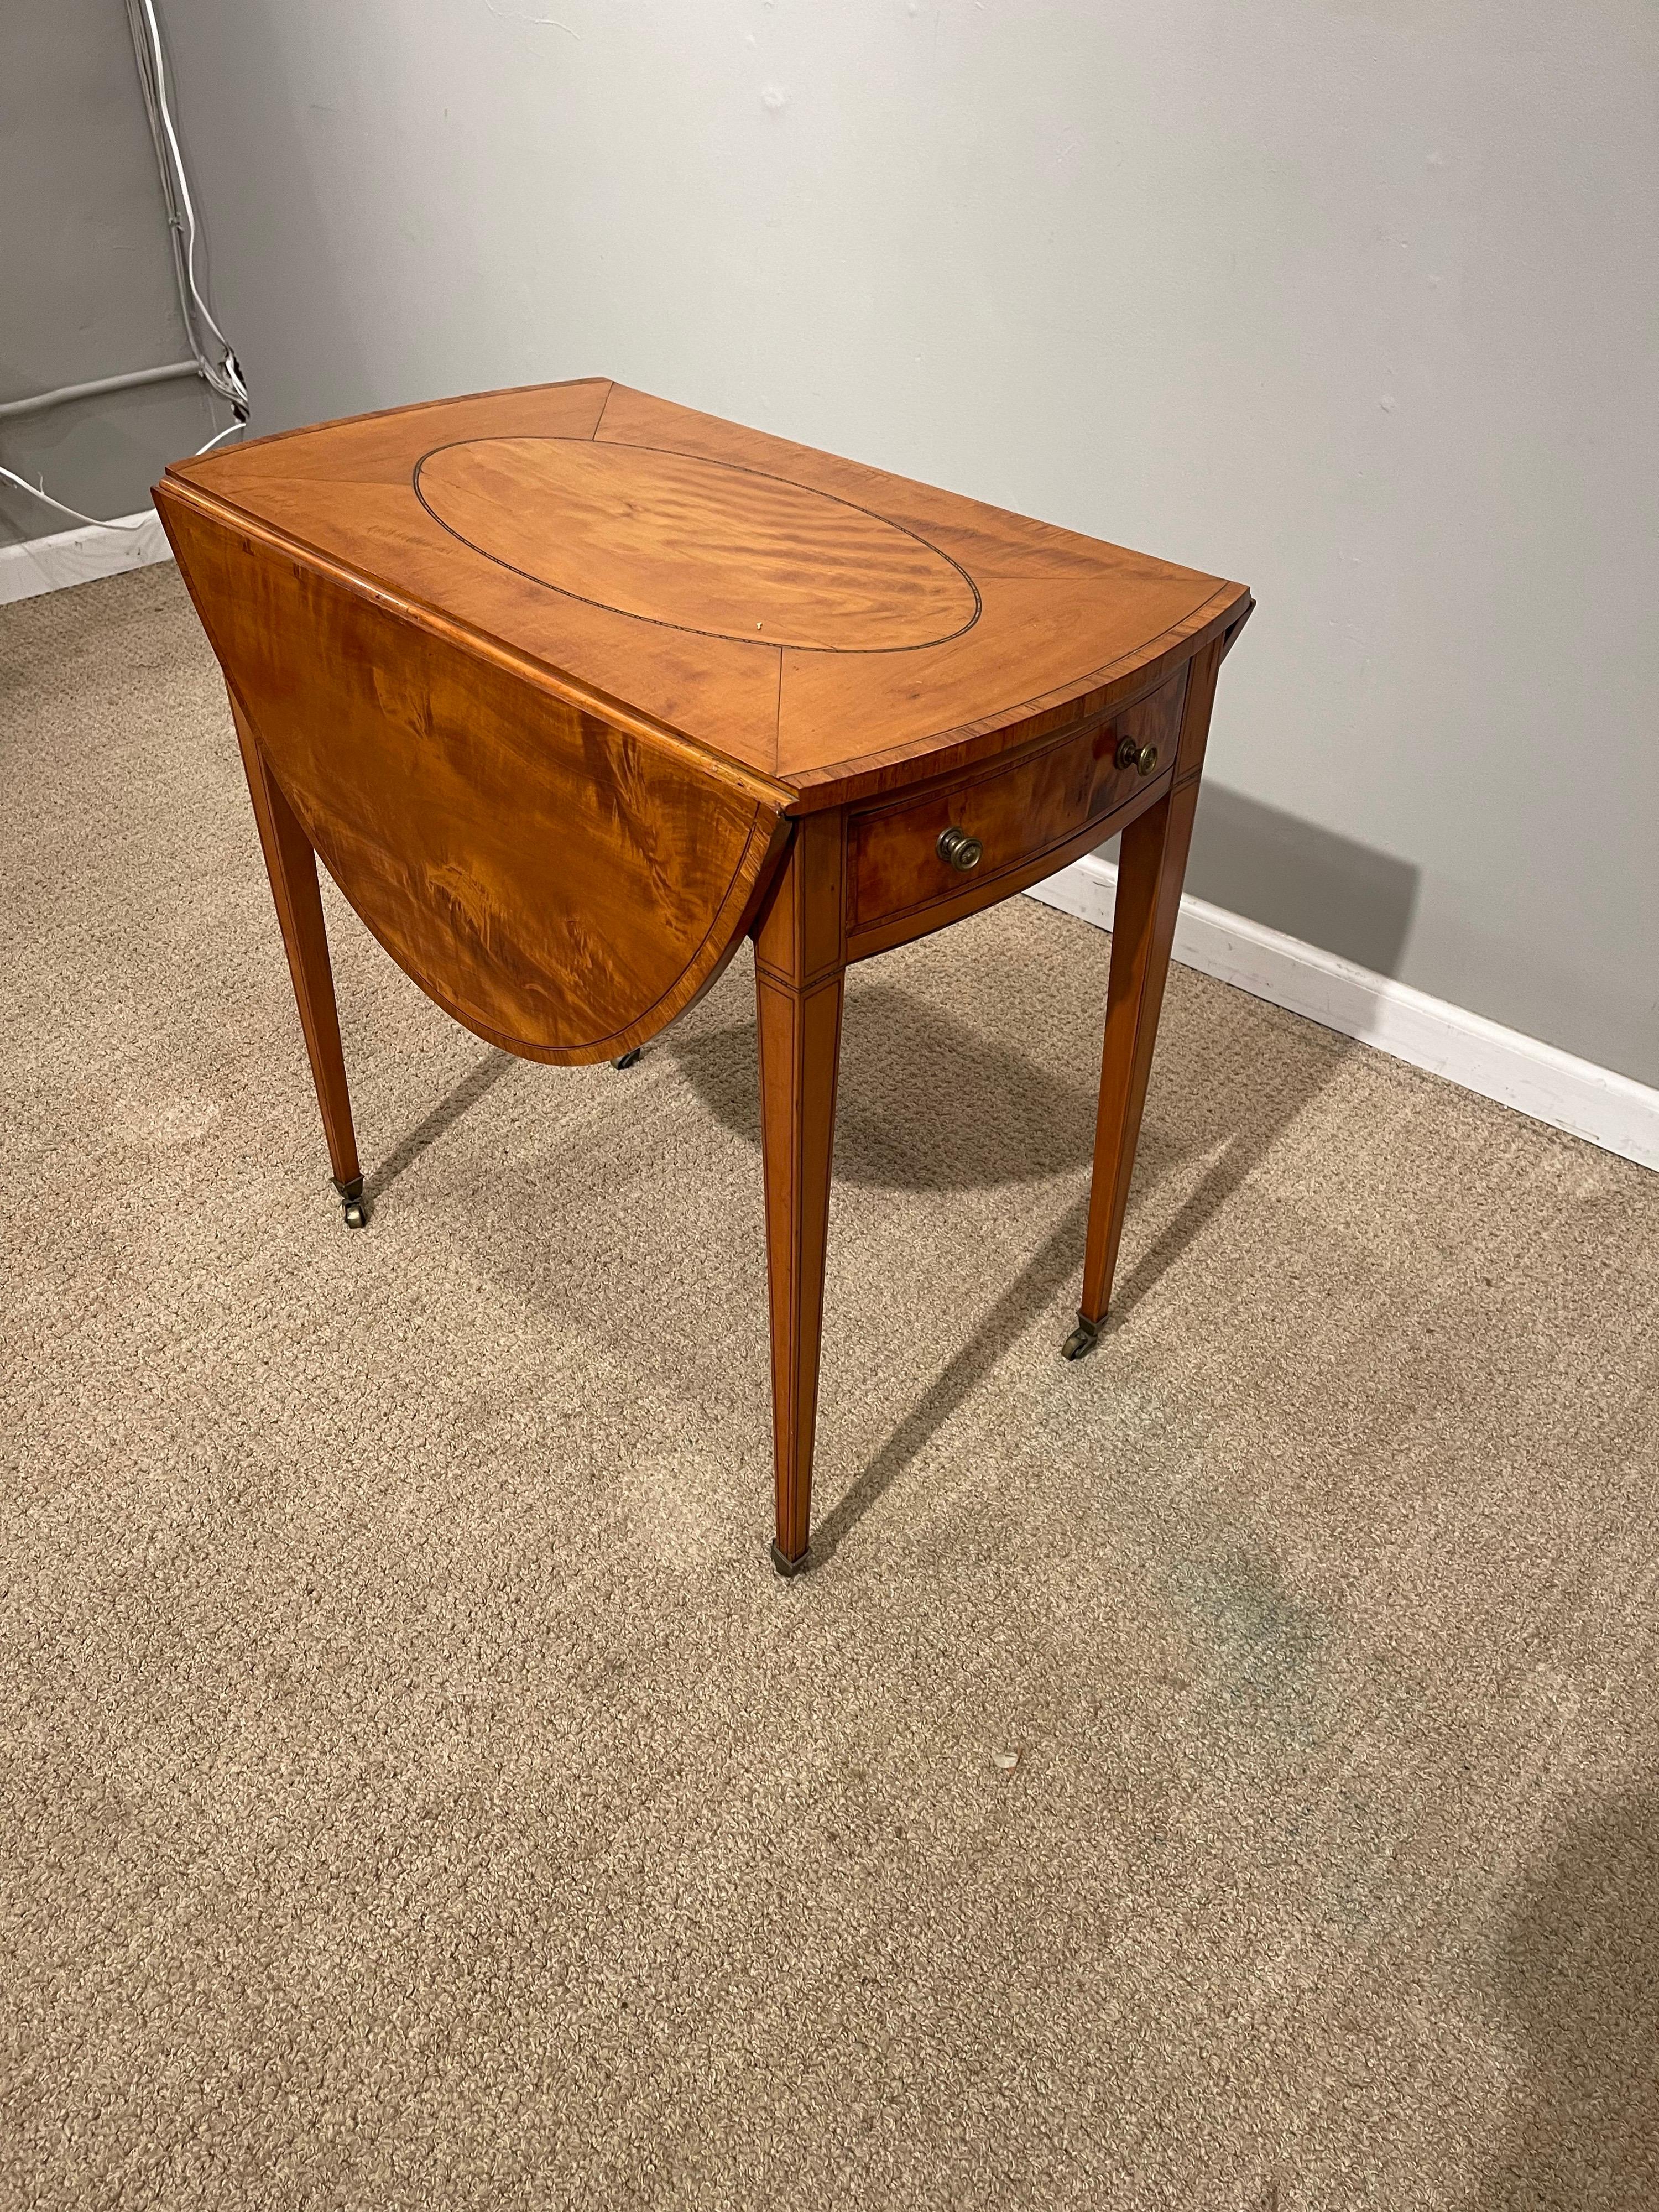 Oval Sheraton Satinwood Pembroke Table, Circa 1790 For Sale 1